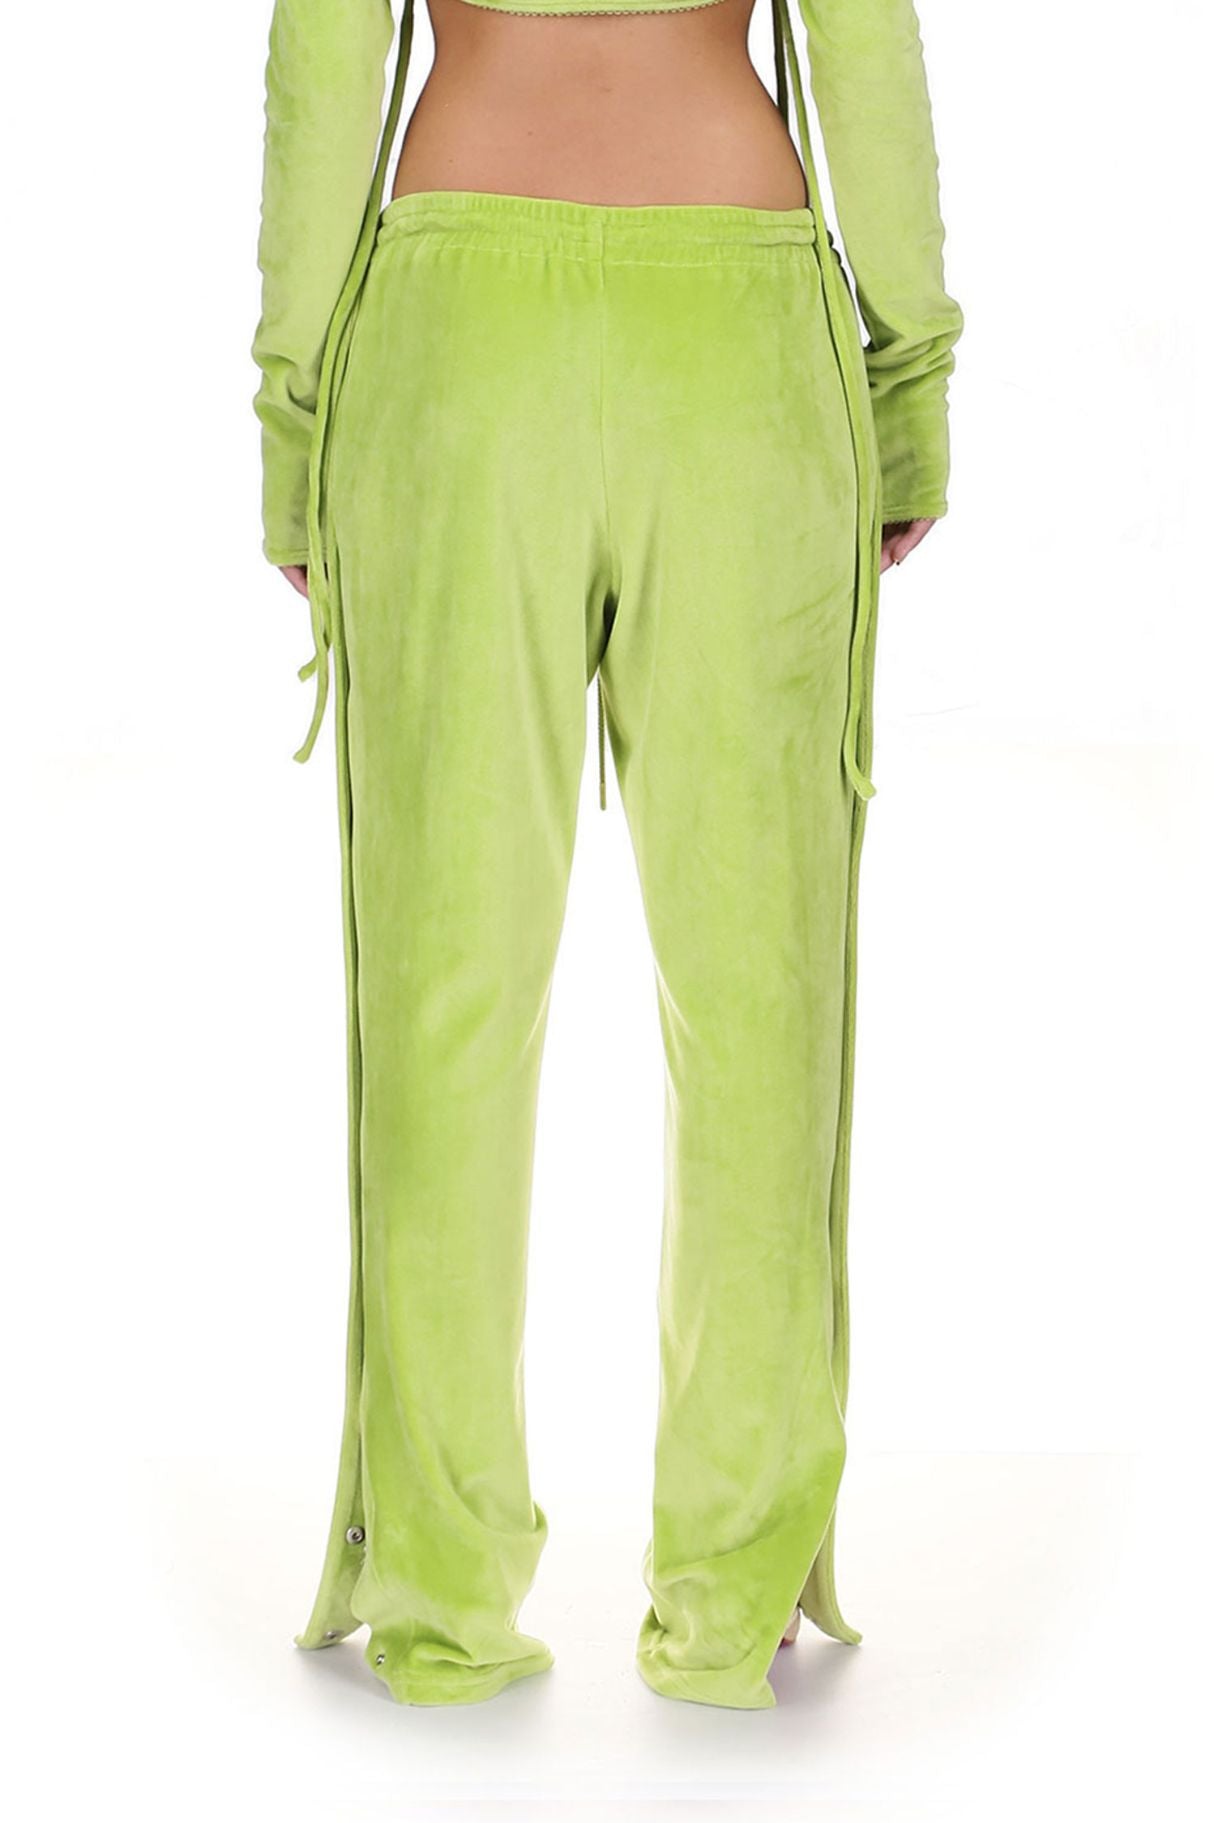 Wasabi Green Velour Track Pants